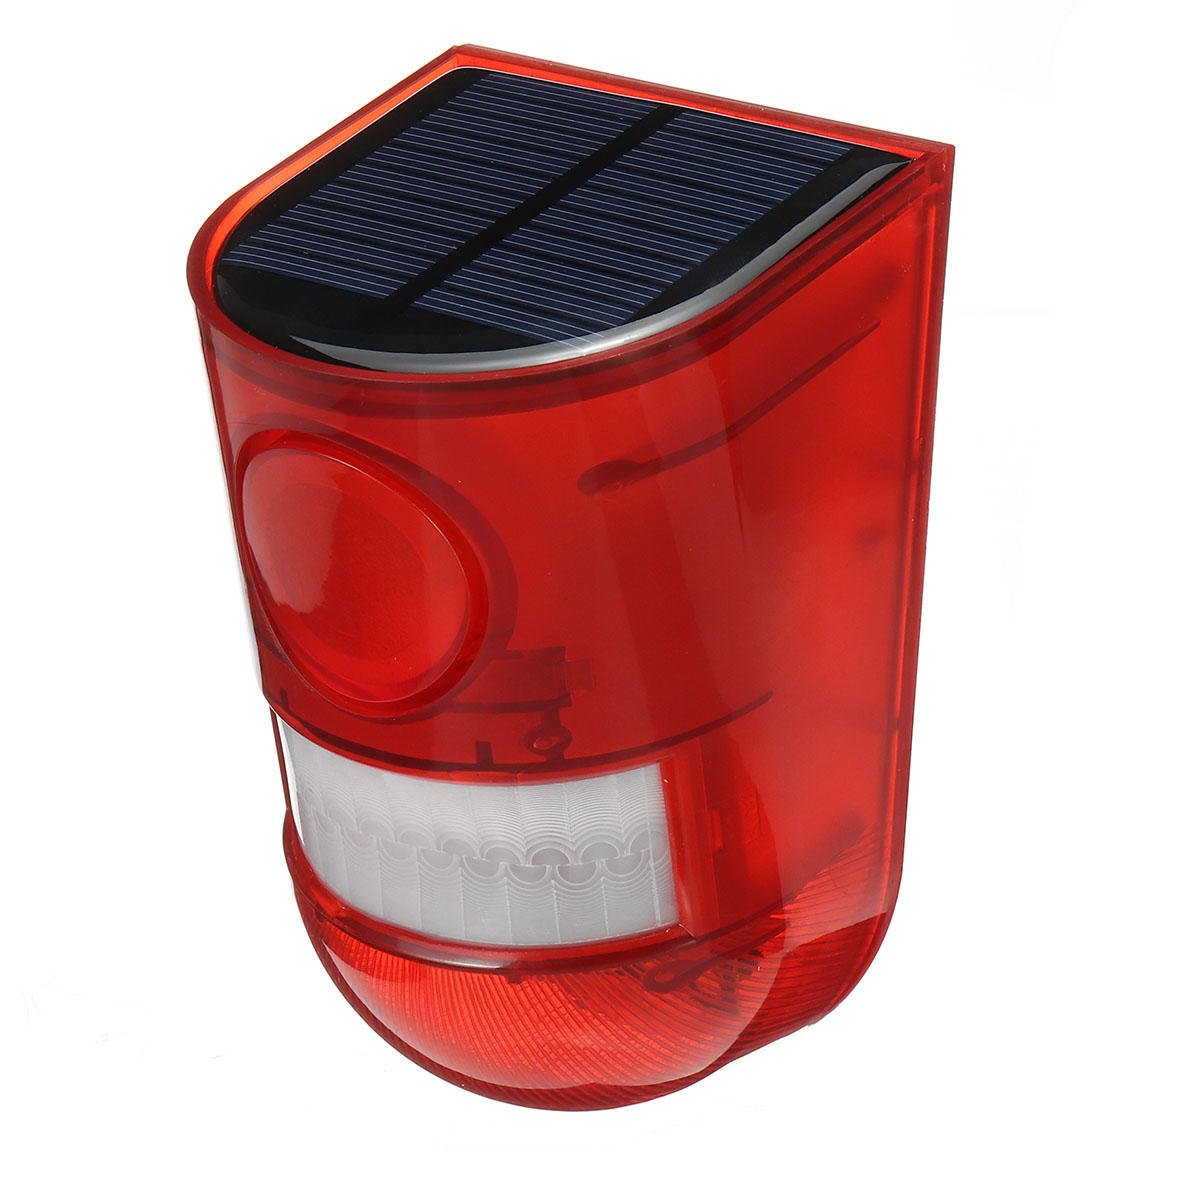 solar alarm light wireless waterproof motion sensor outdoor garden security lamp Sale